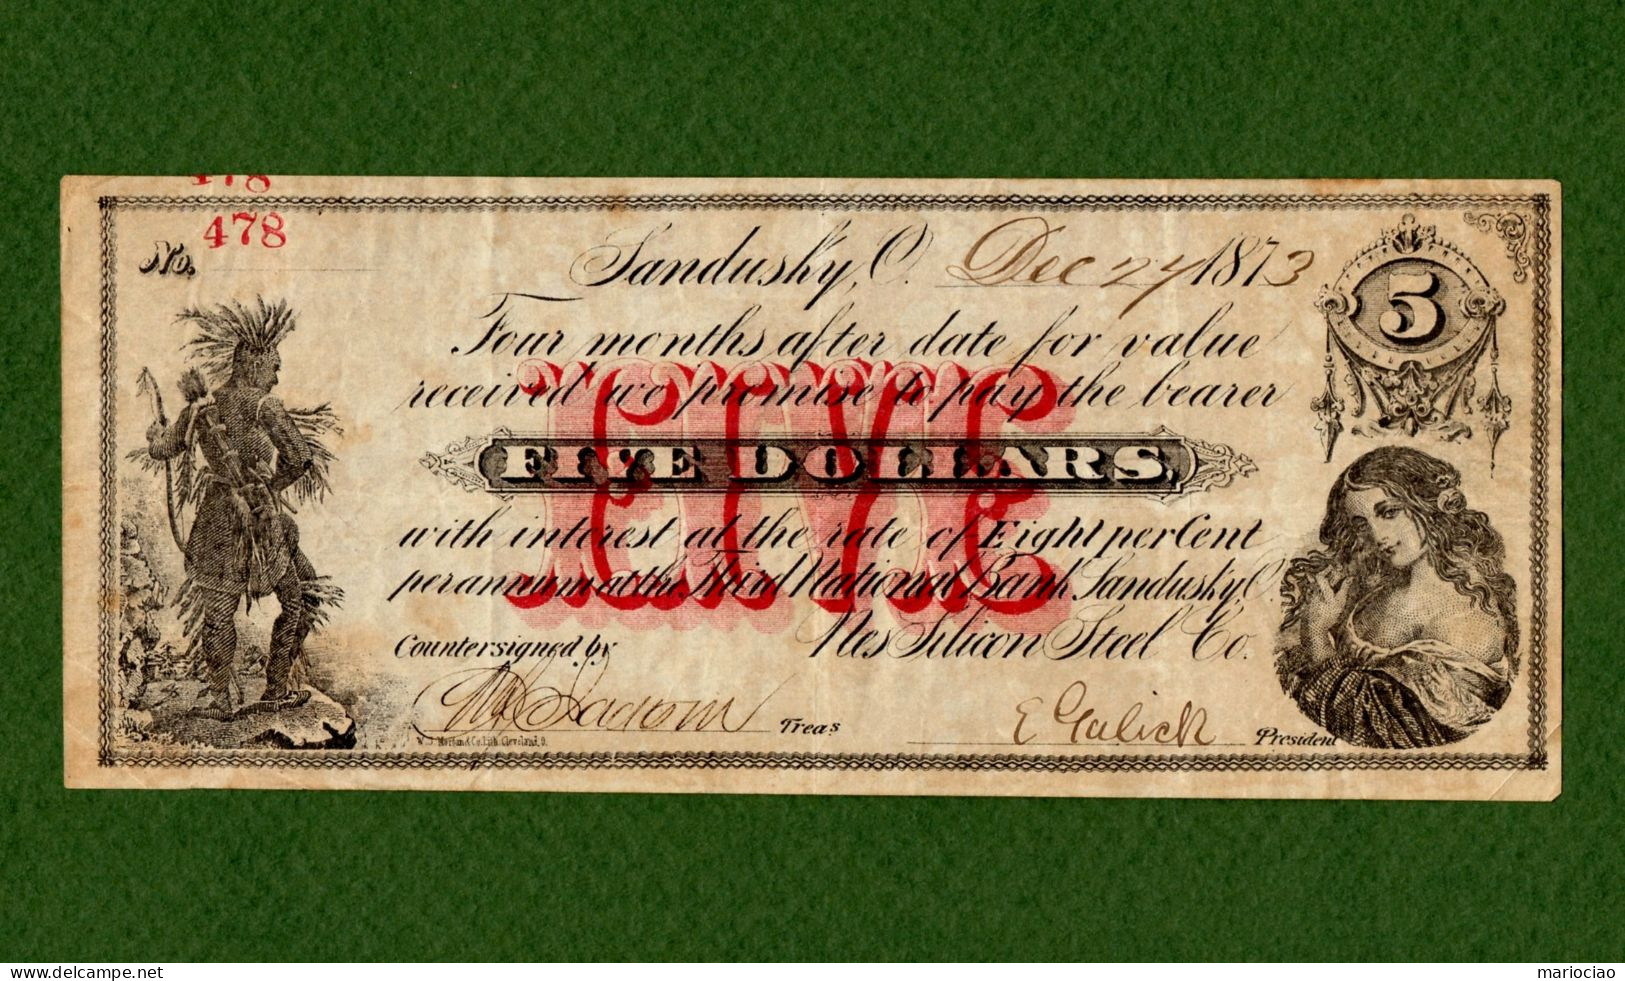 USA note National Bank Sandusky & Nes Silicon Steel Co. Ohio 1873 $1 - $2 - $5 LOT